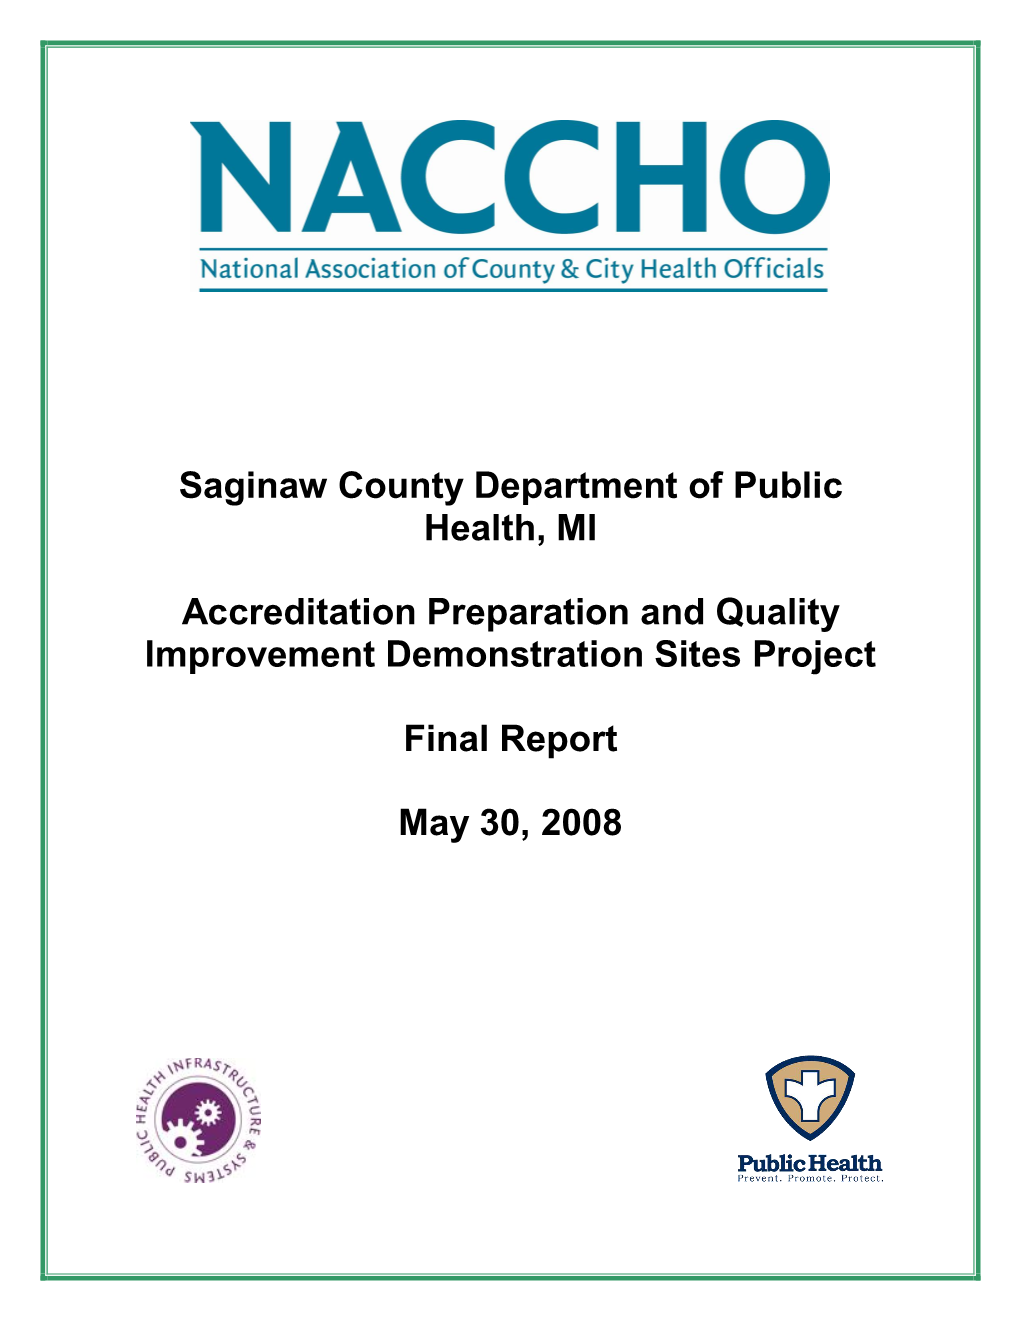 Saginaw County Department of Public Health, MI Accreditation